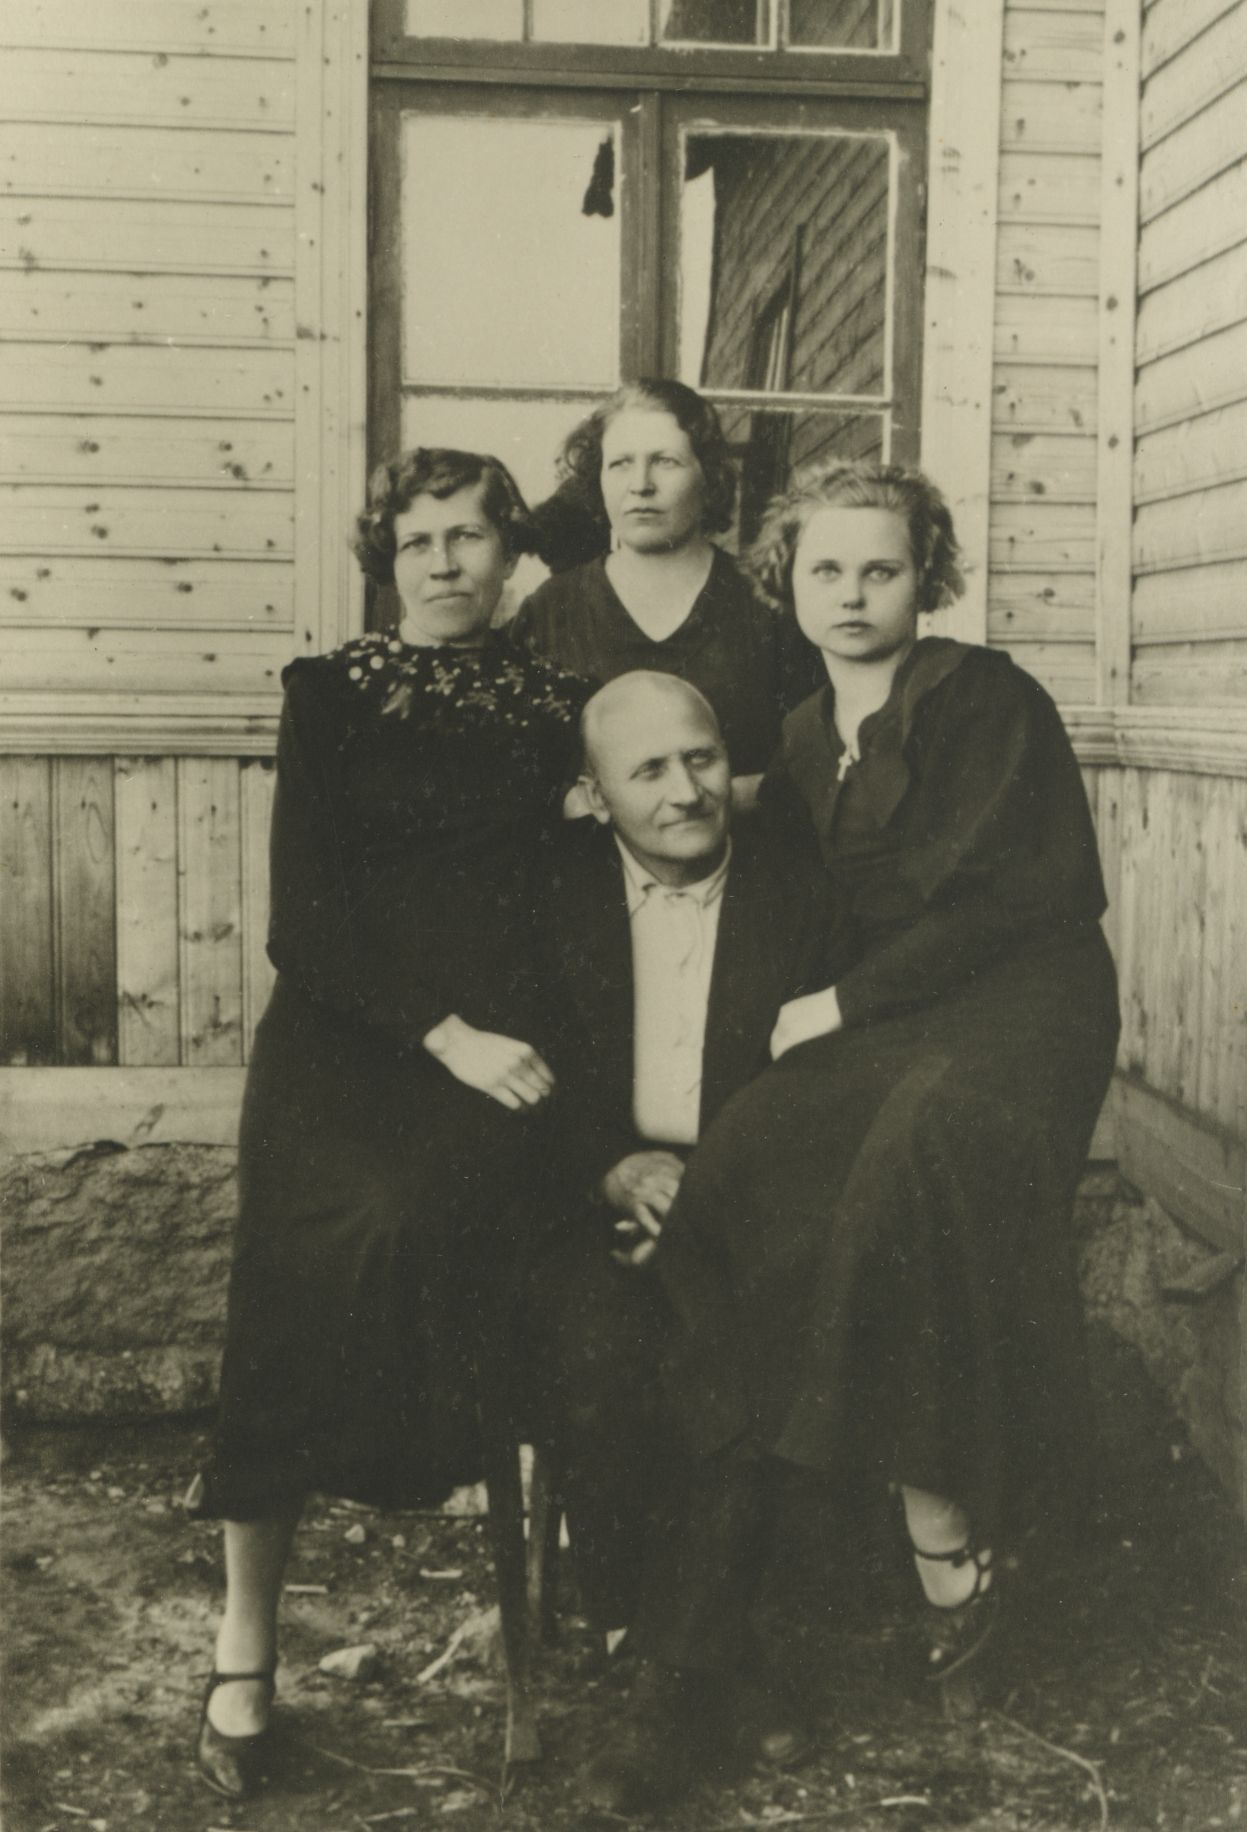 Mart Kiirats, Aliide Sildvere, Marie Kiirats, Hilda Saukas in 1937 or 1938.